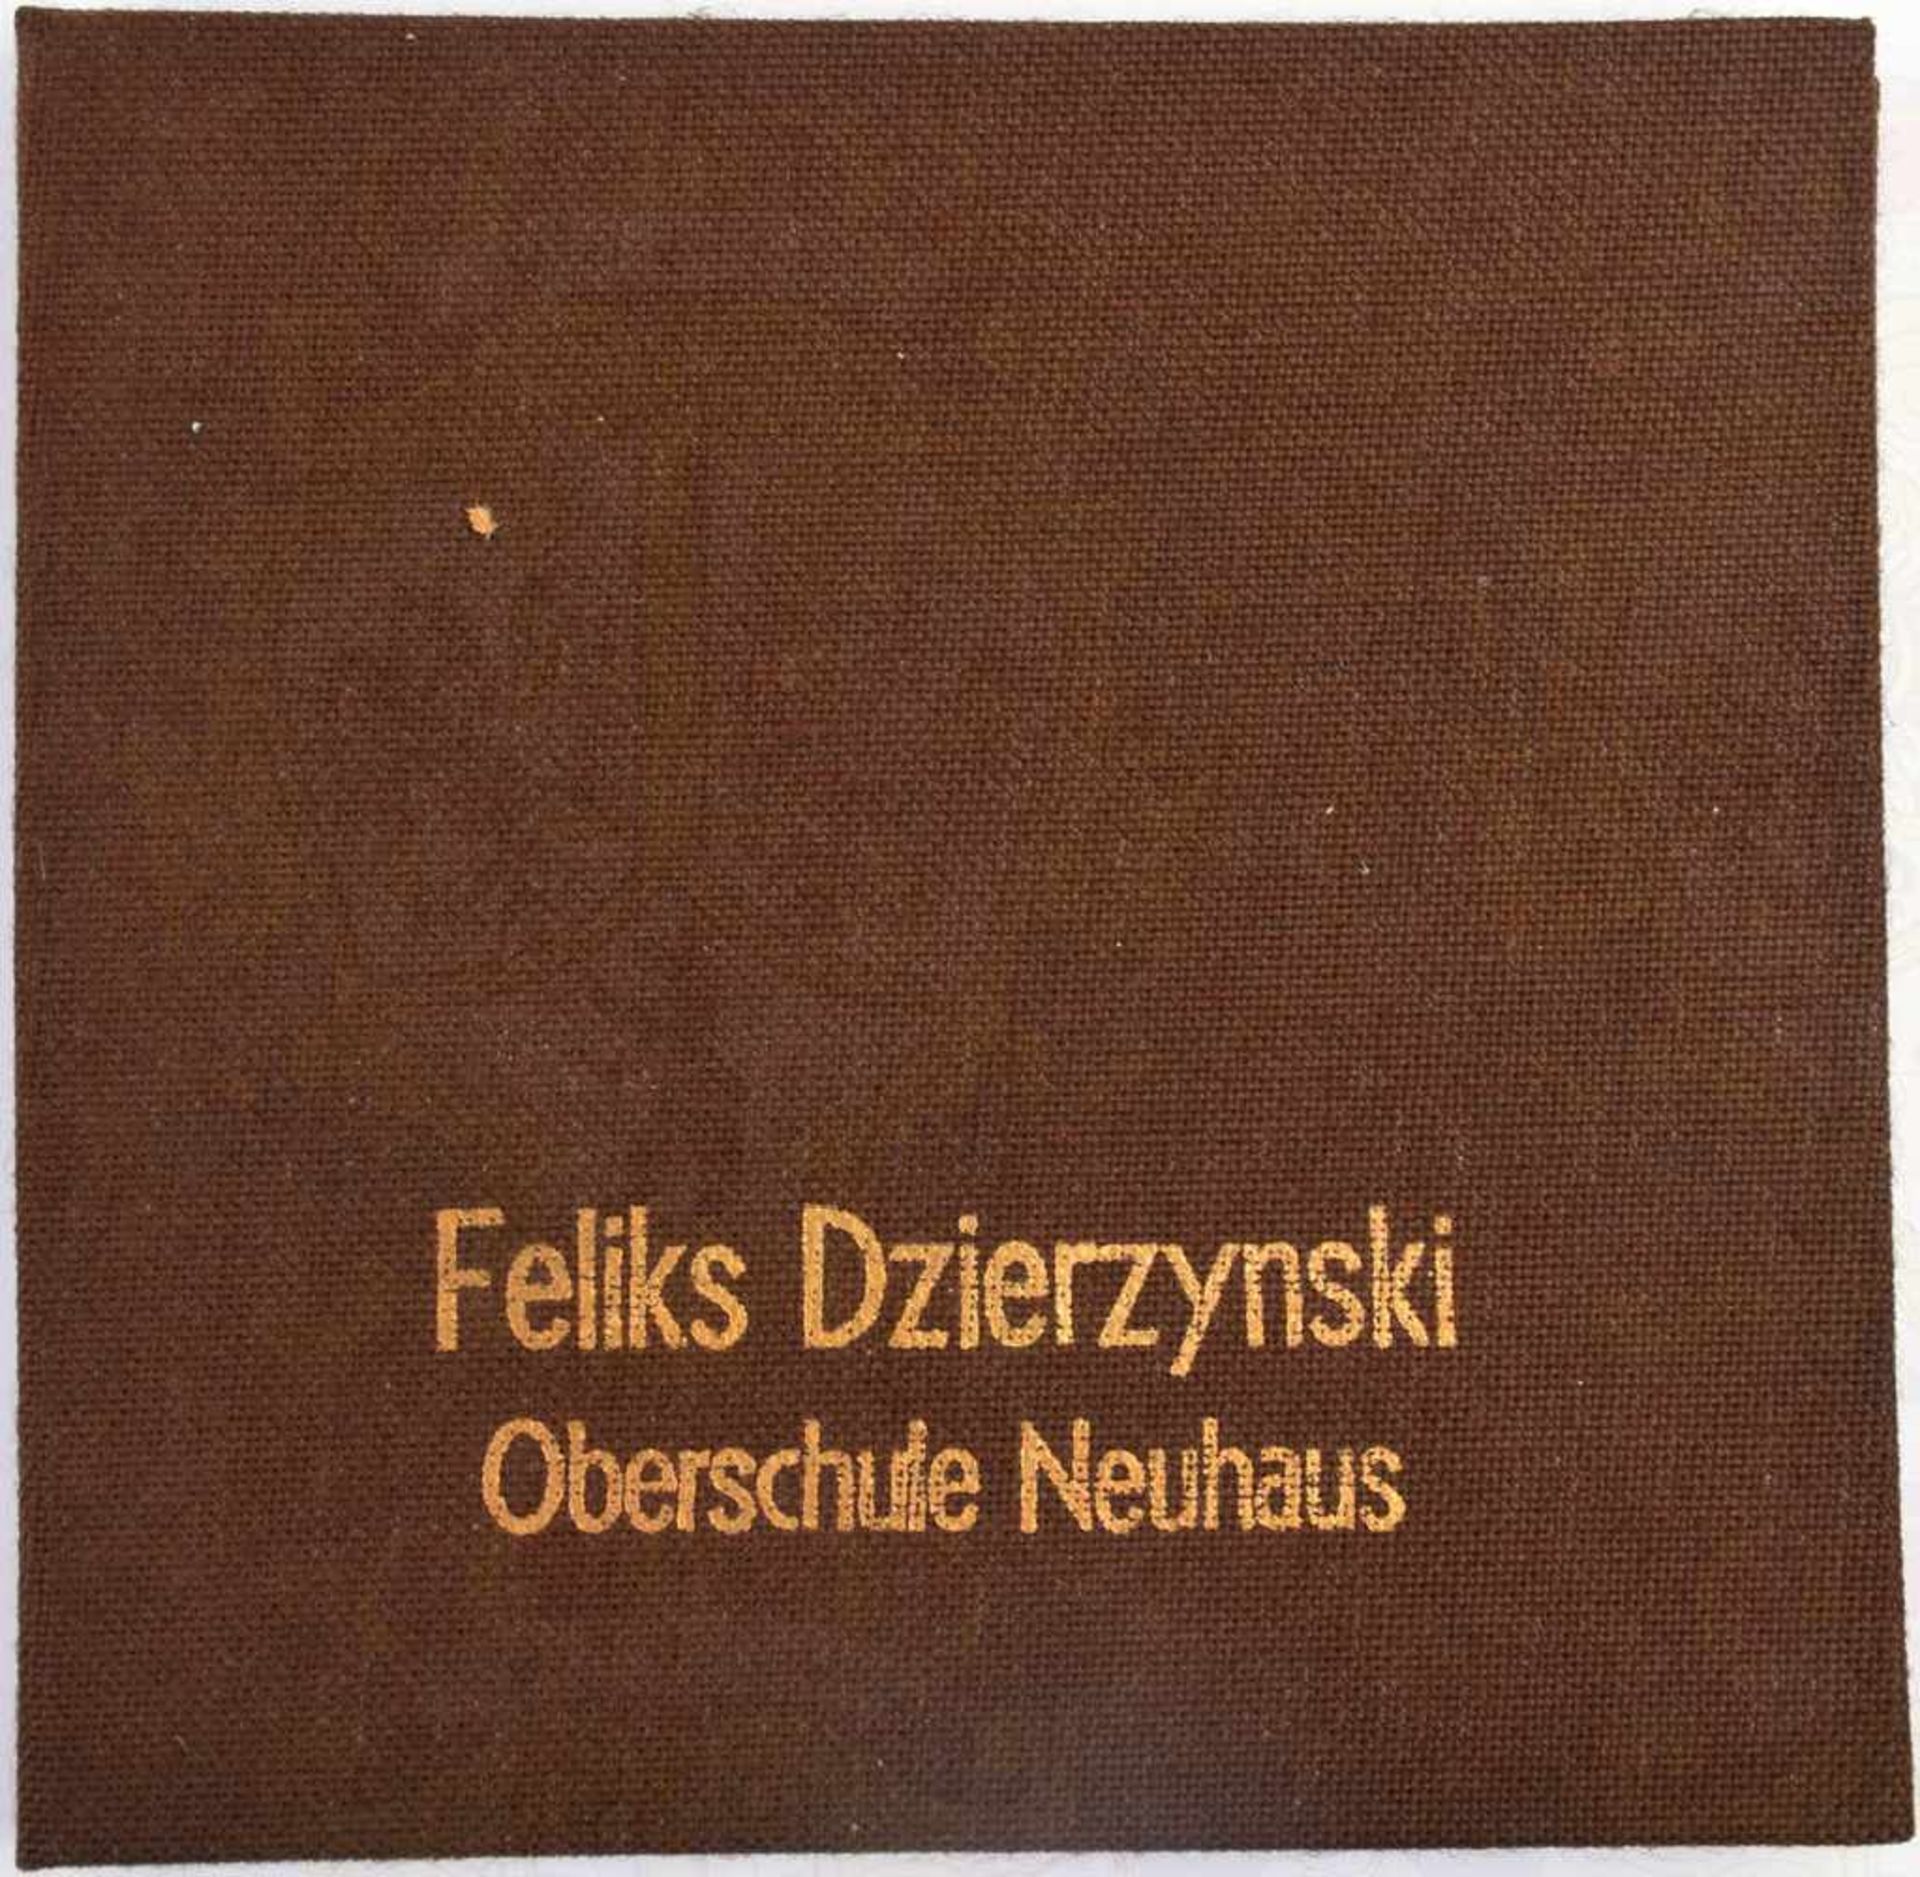 GESCHENKFLIESE OBERSCHULE NEUHAUS, Portrait Feliks Dzierzynski, zur Namensgebung d. Oberschule - Bild 2 aus 2